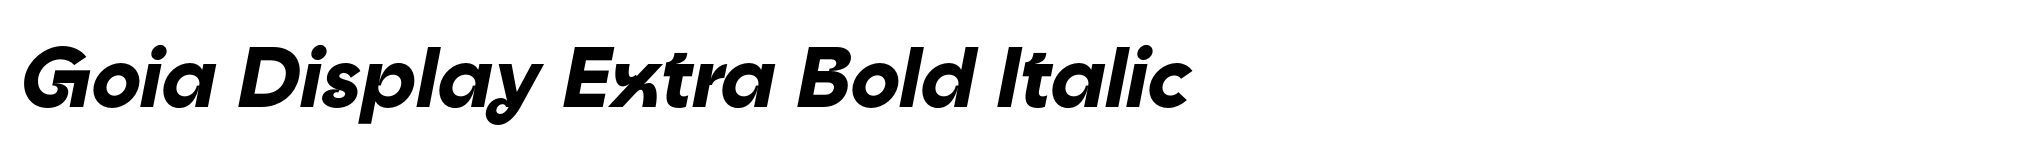 Goia Display Extra Bold Italic image